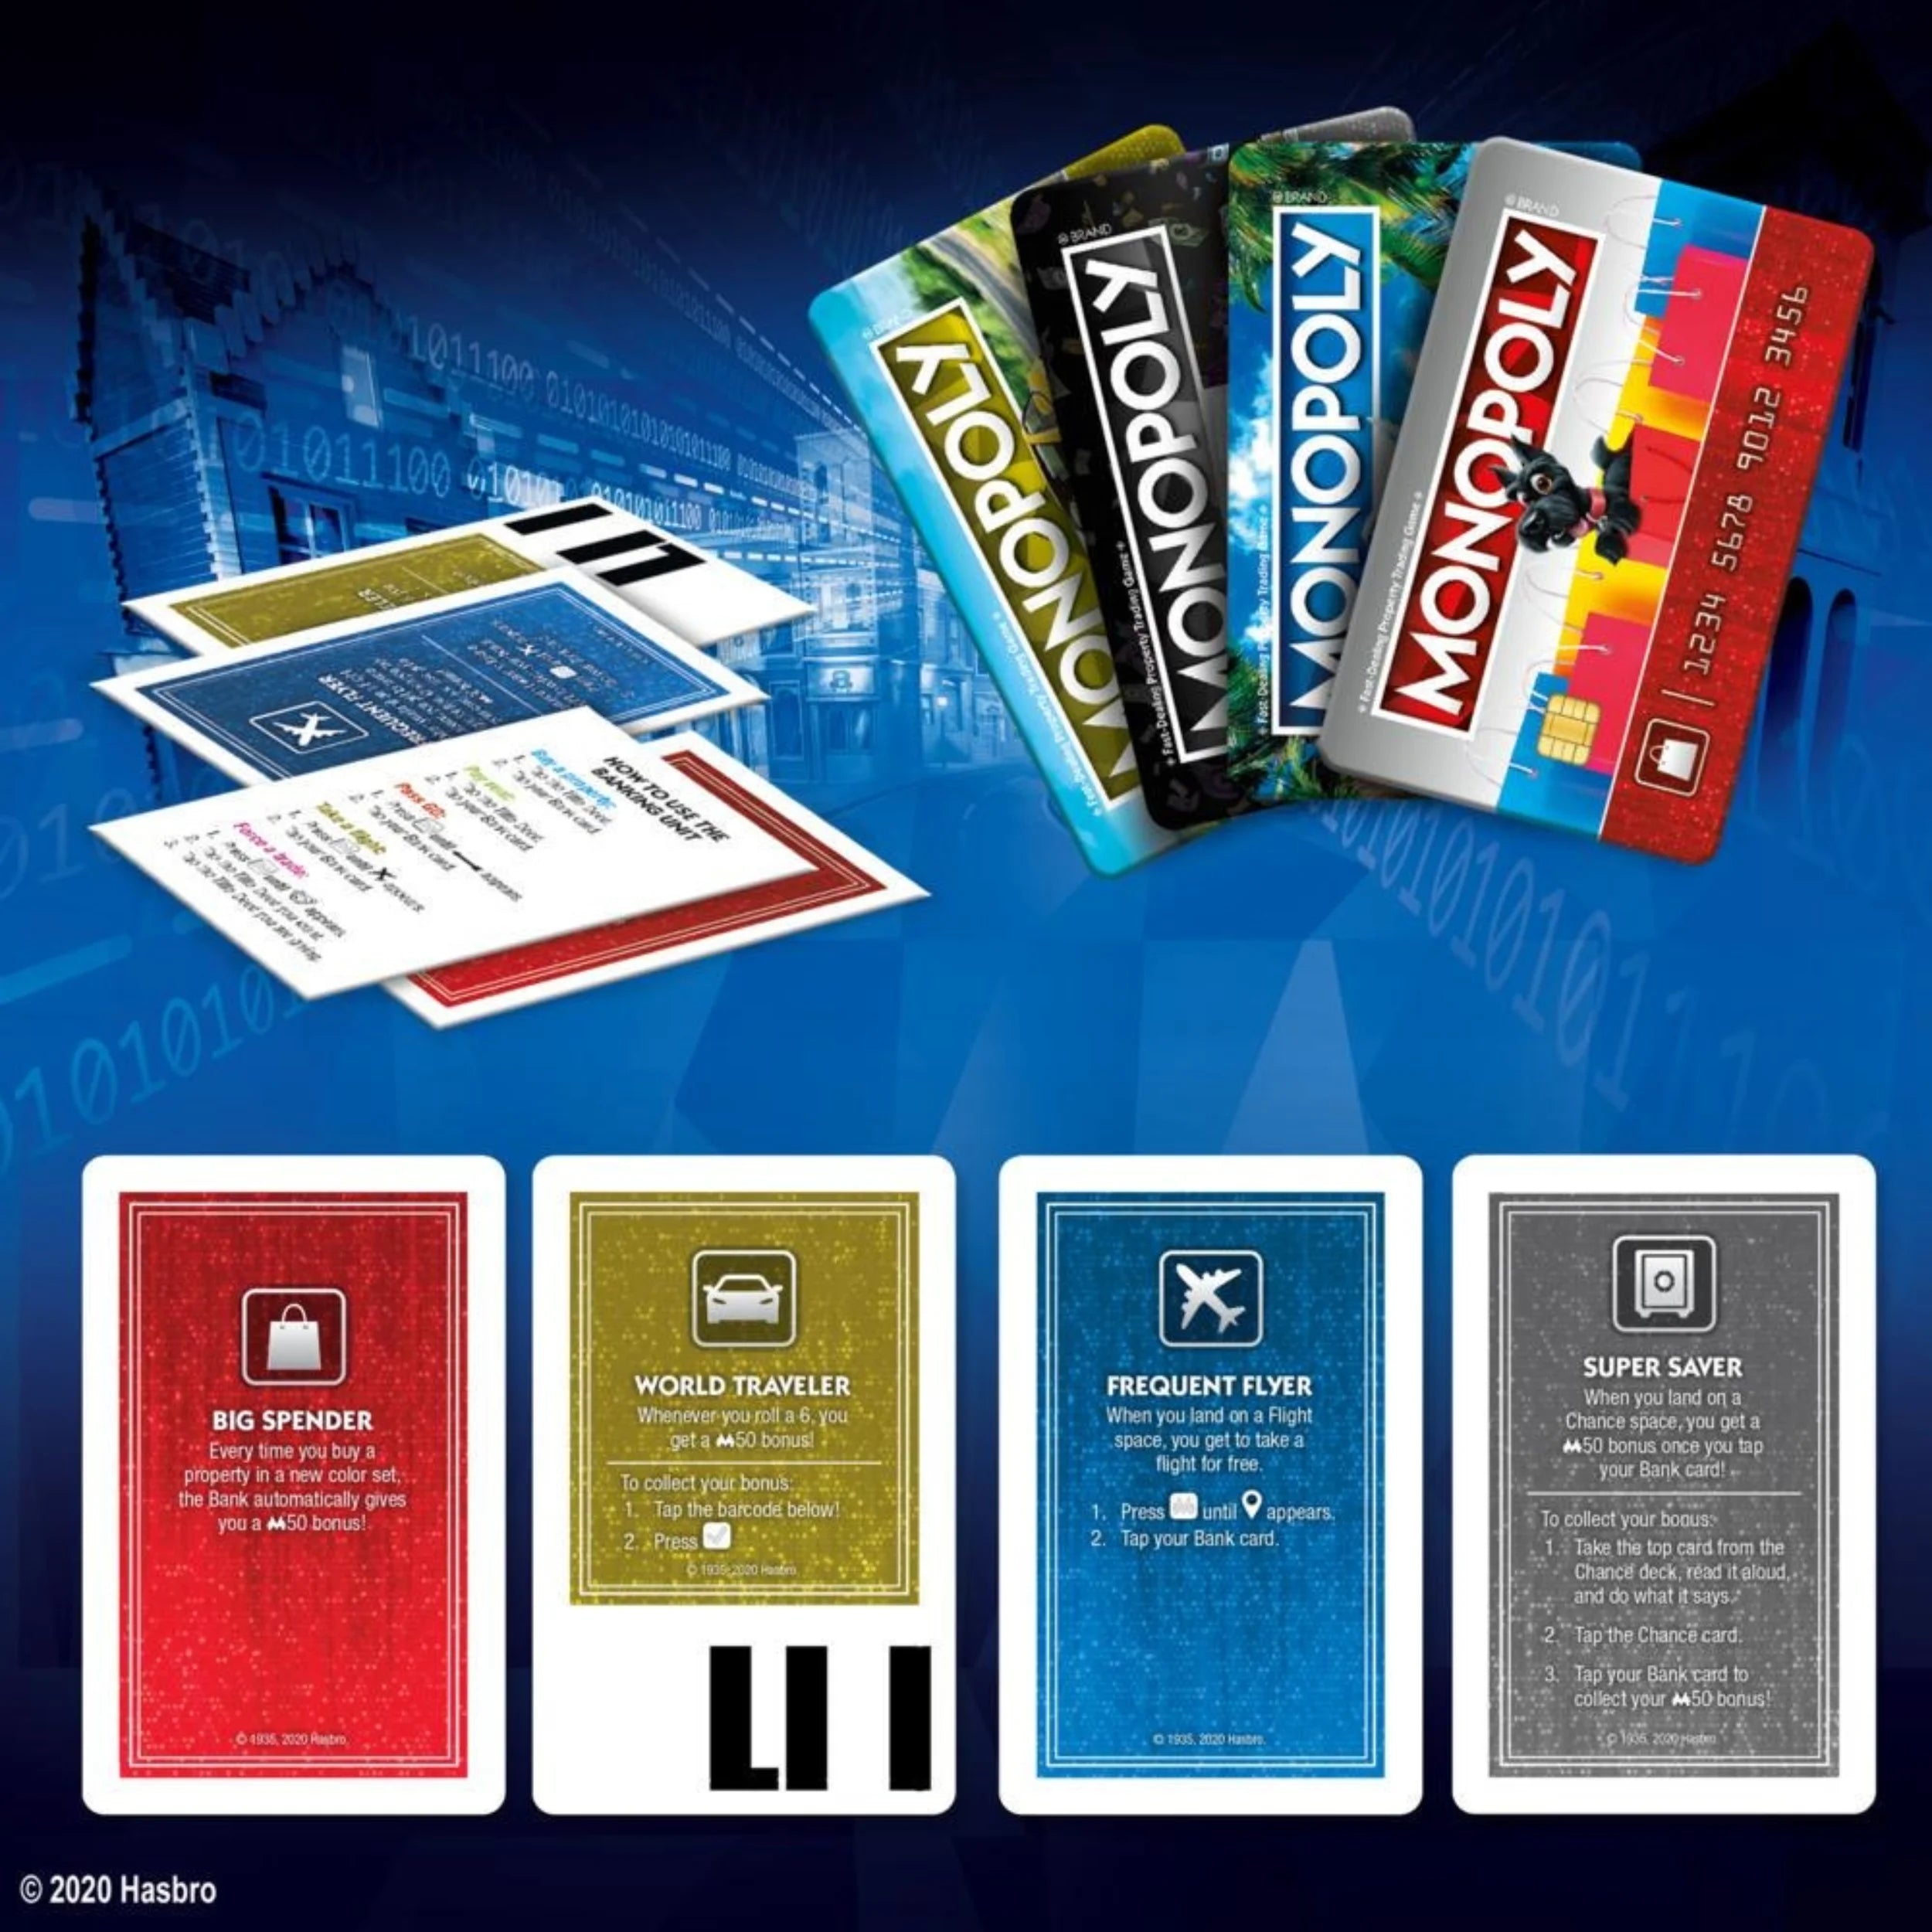 Hasbro Gaming - Monopoly Super Electronic Banking Board Game - Italian Edition